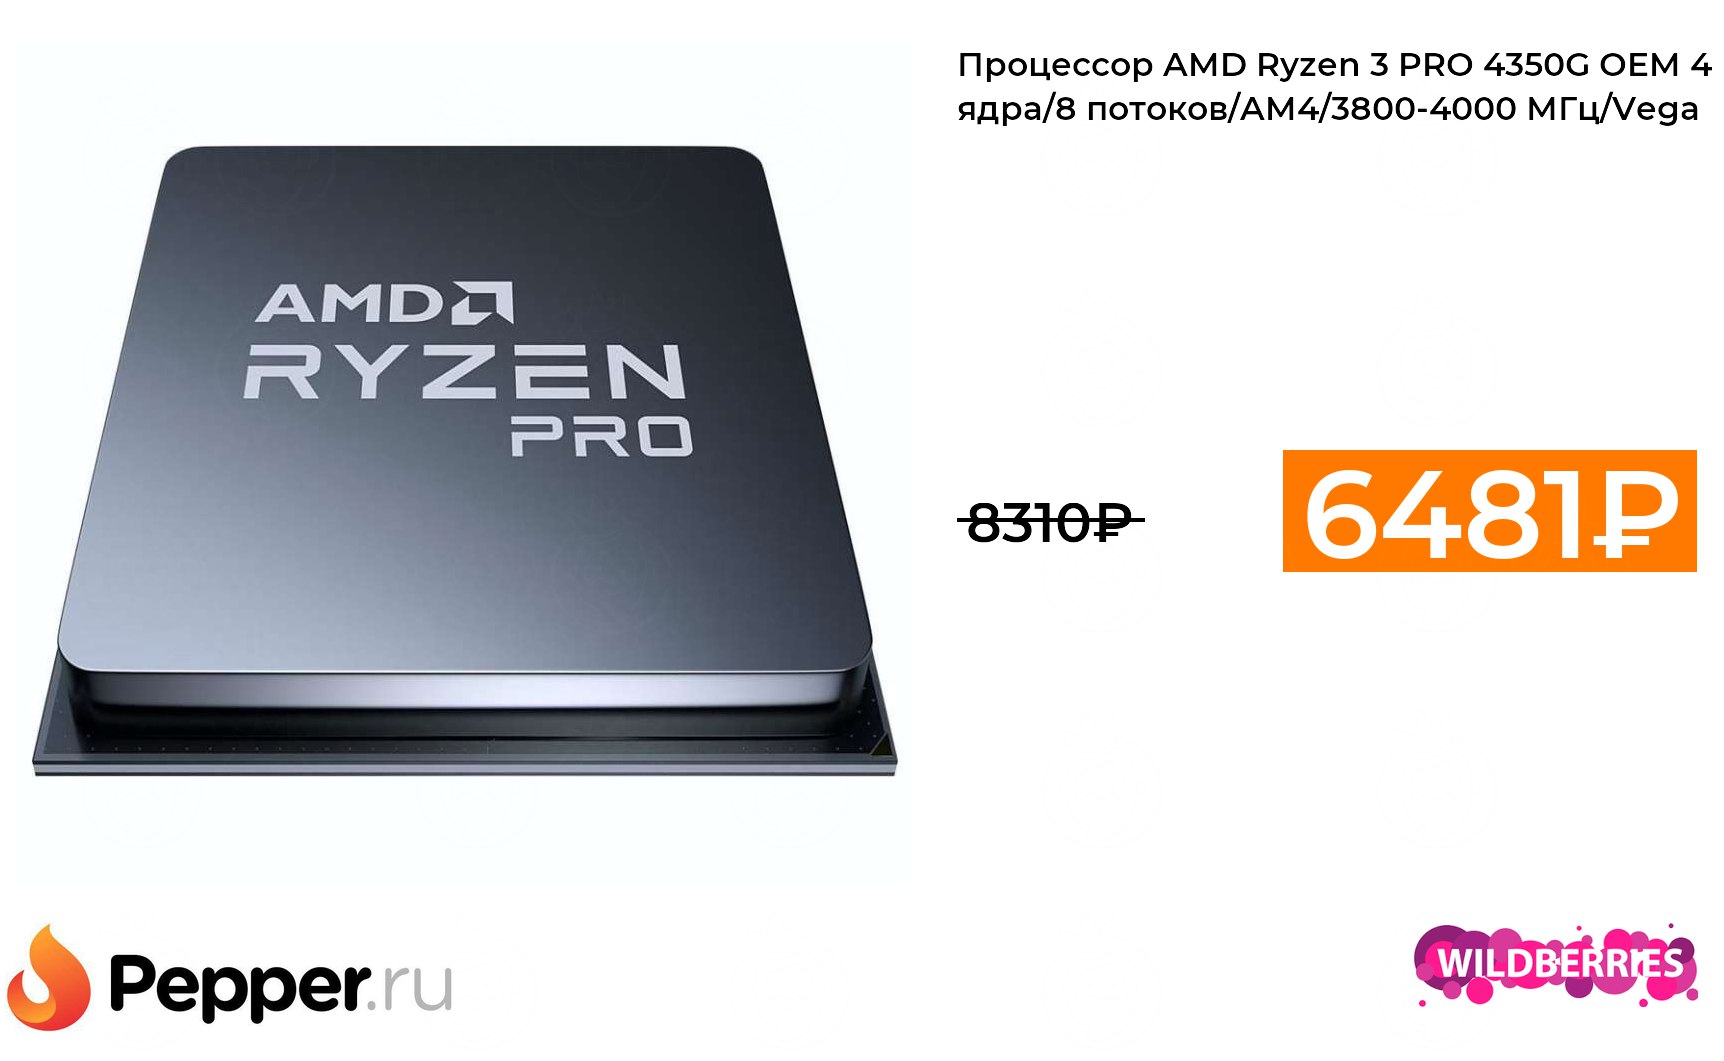 Ryzen 3 pro 4350g. Процессор AMD Ryzen 3 Pro 4350g OEM. AMD Ryzen 3 Pro 4350g am4, 4 x 3800 МГЦ.